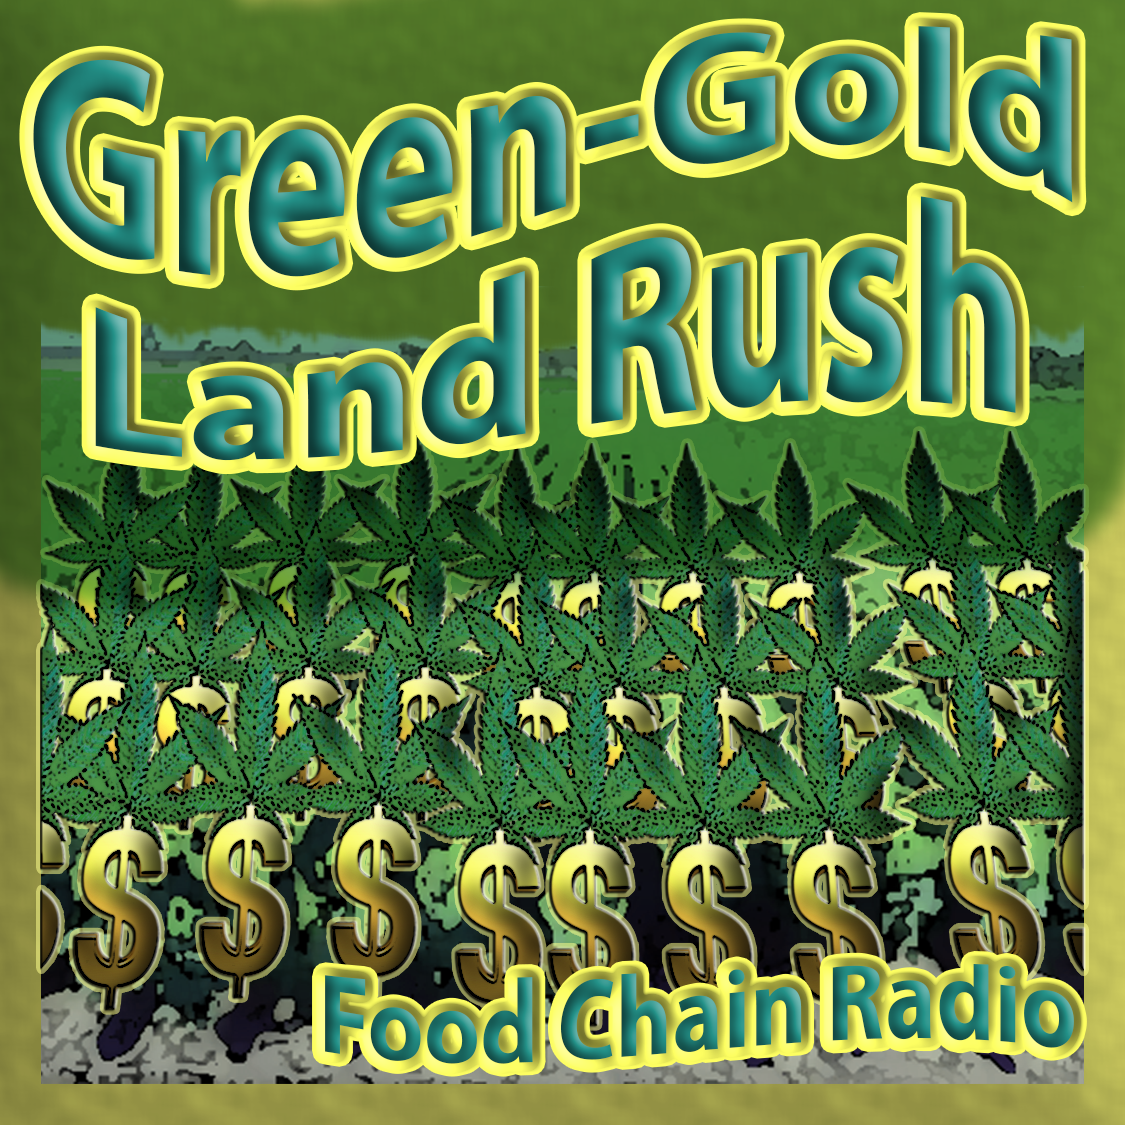 Michael Olson Food Chain Radio – Cannabis Farmland and the Green-Gold Land Rush